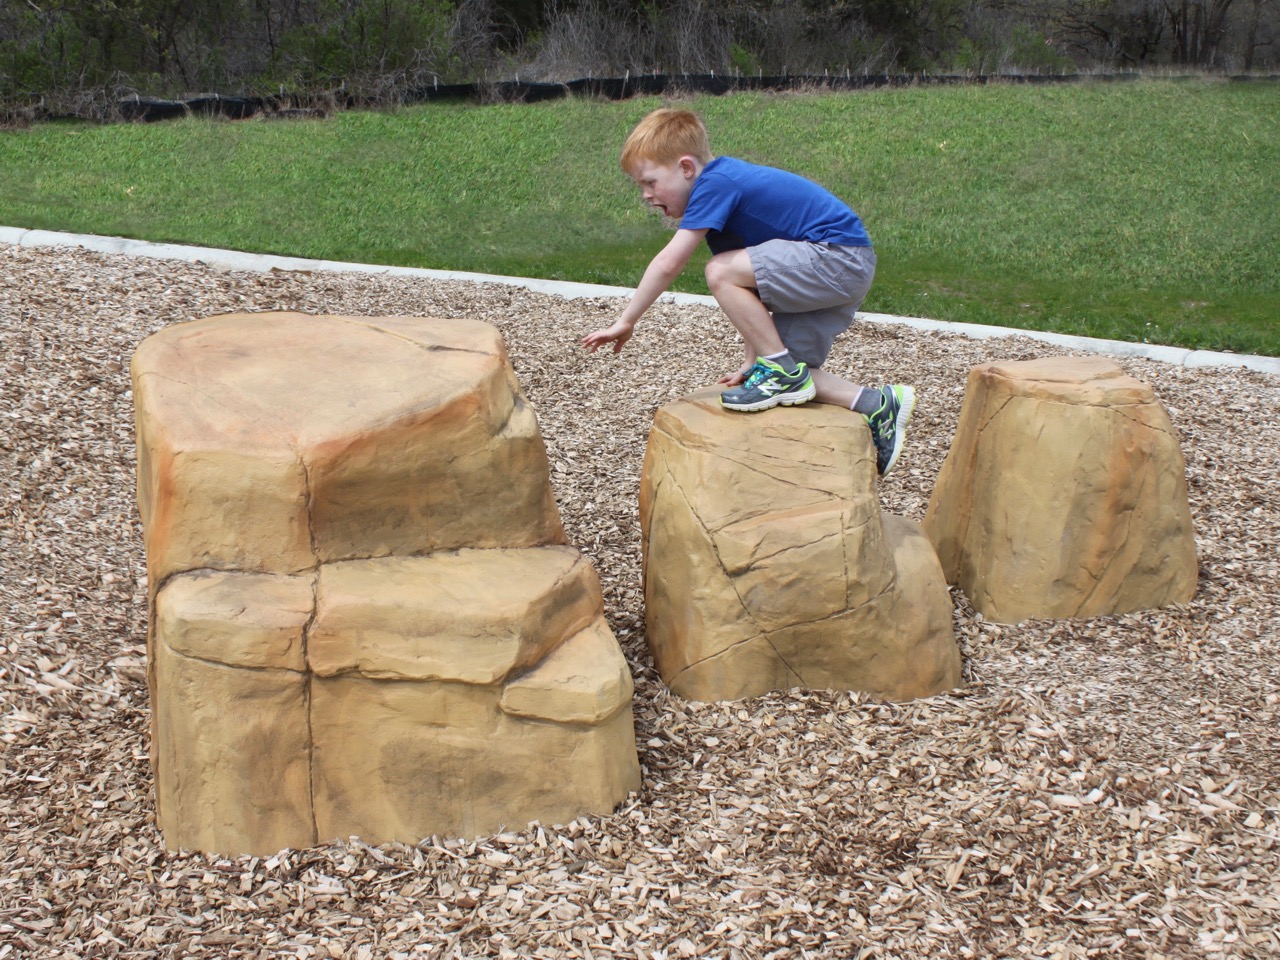 Playground climbing boulders